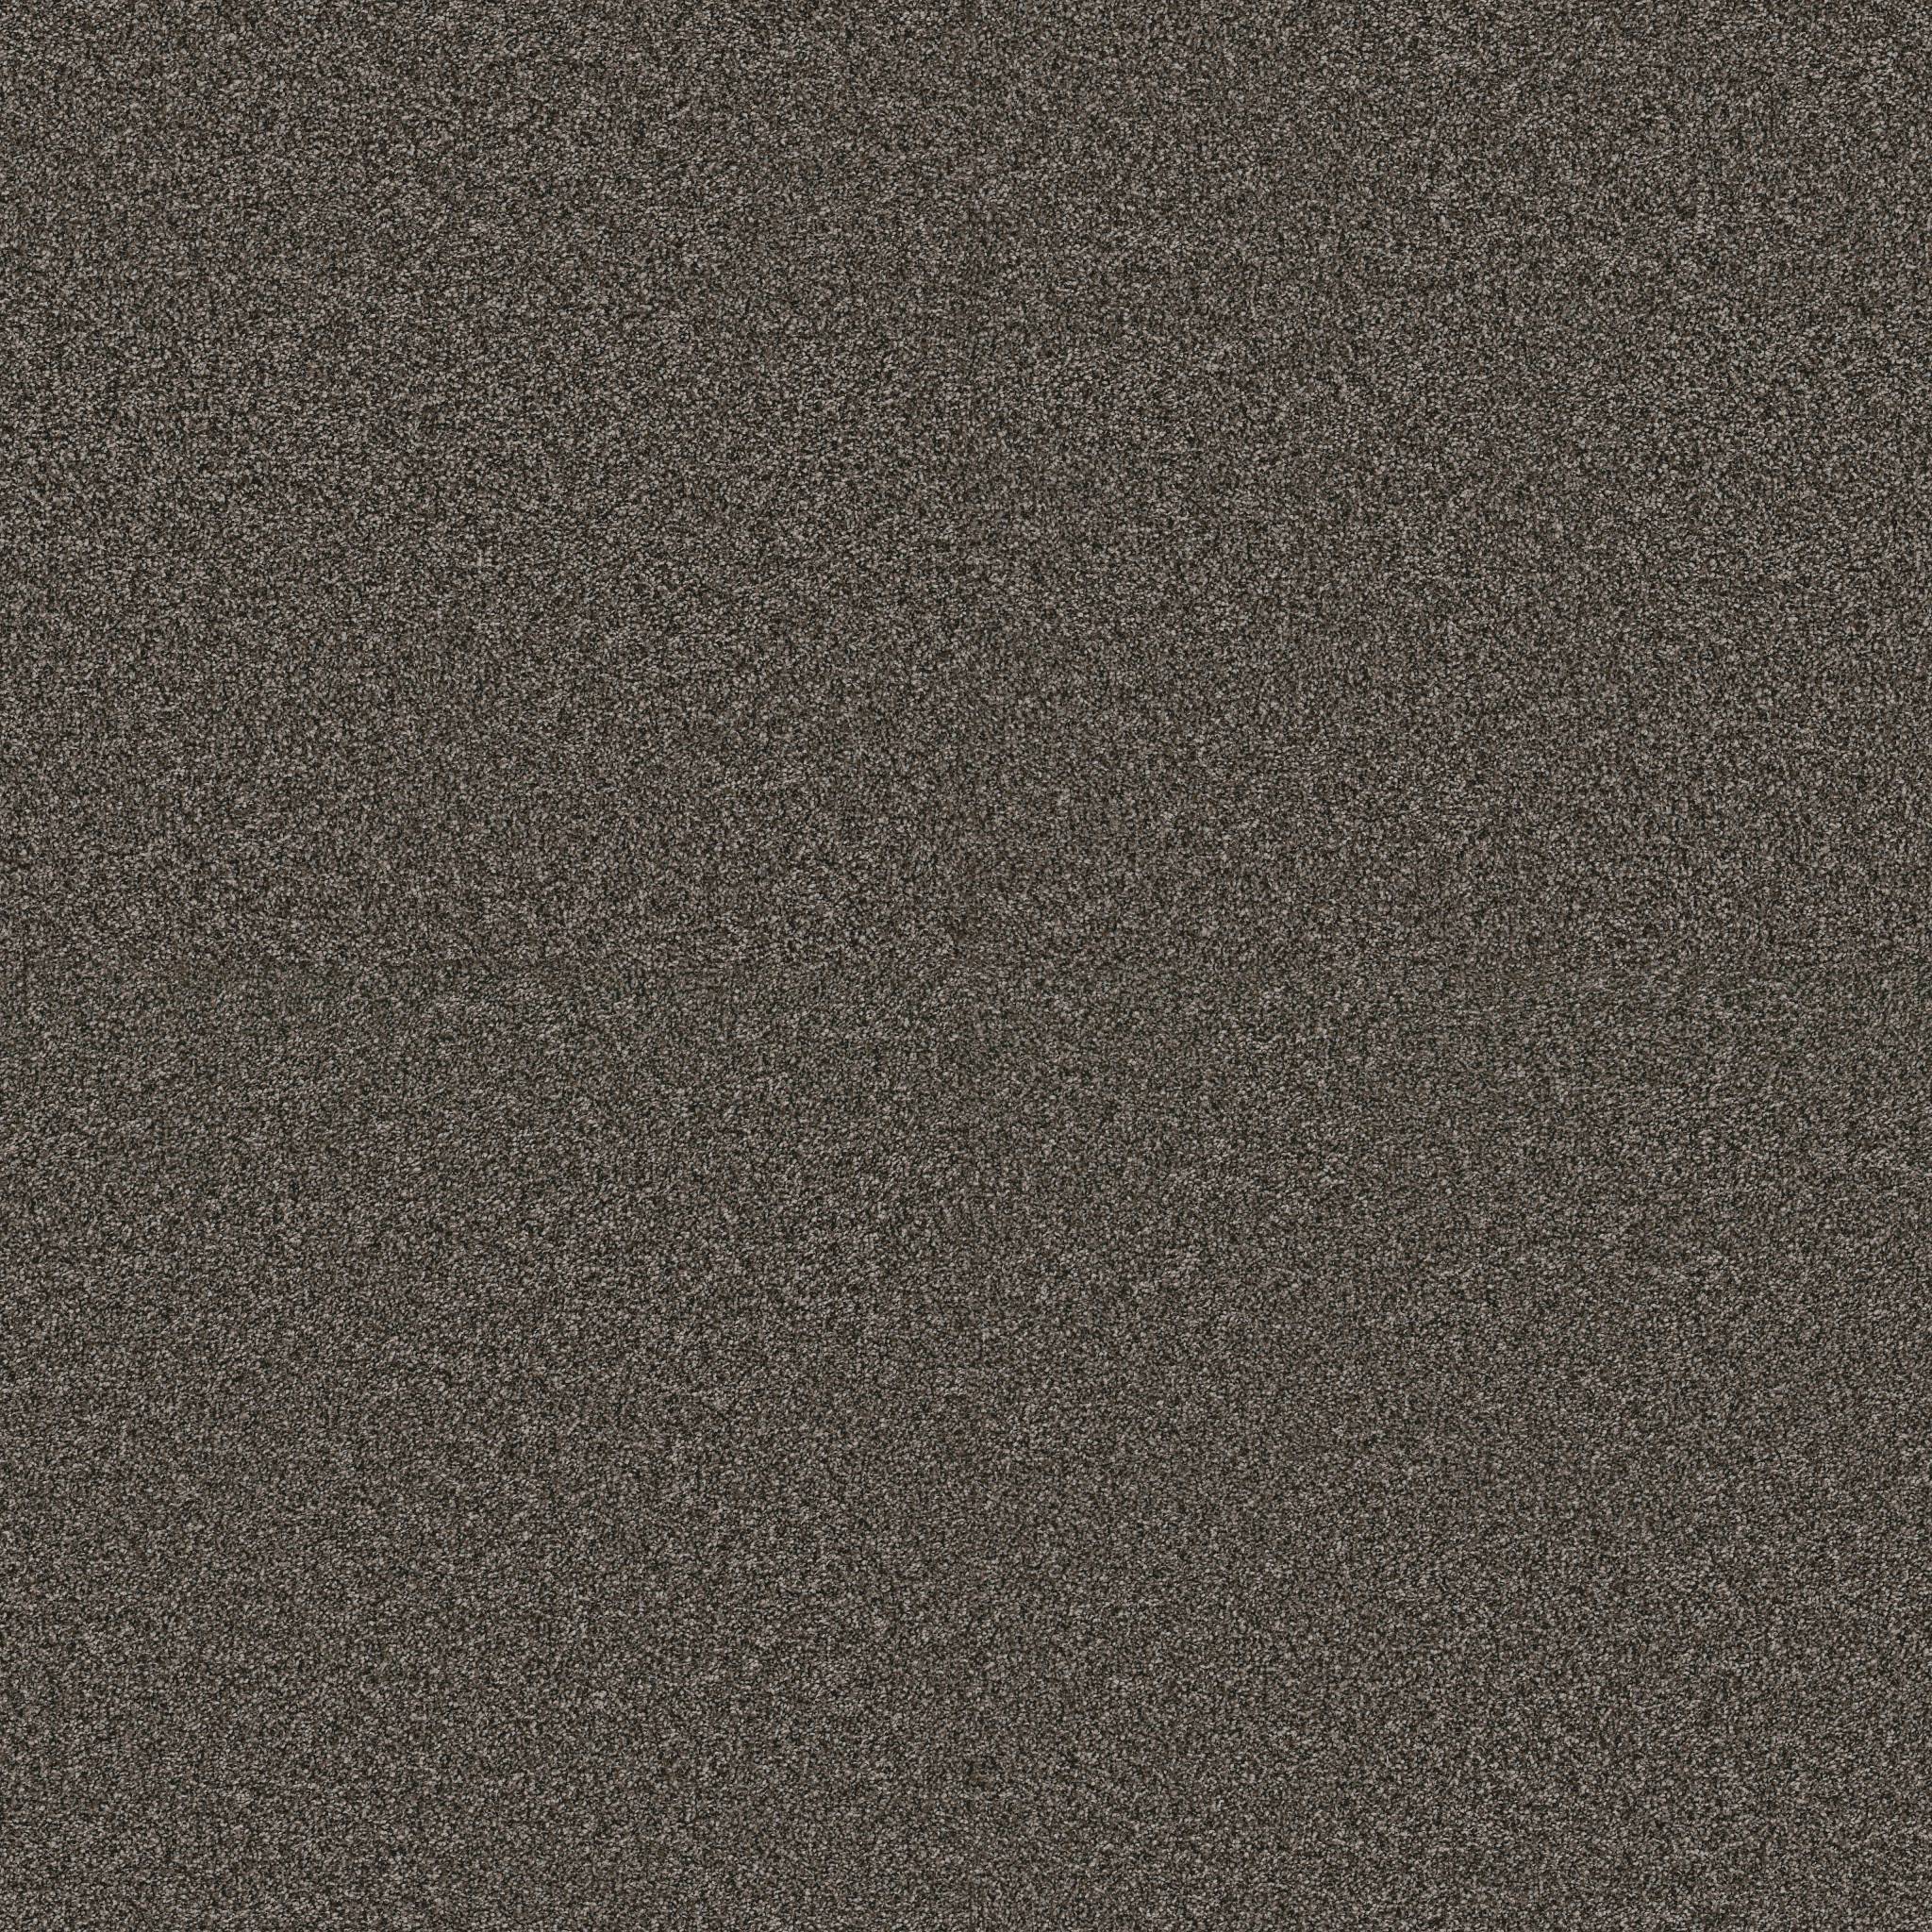 Kaleidoscope Carpet - Espresso Zoomed Swatch Image